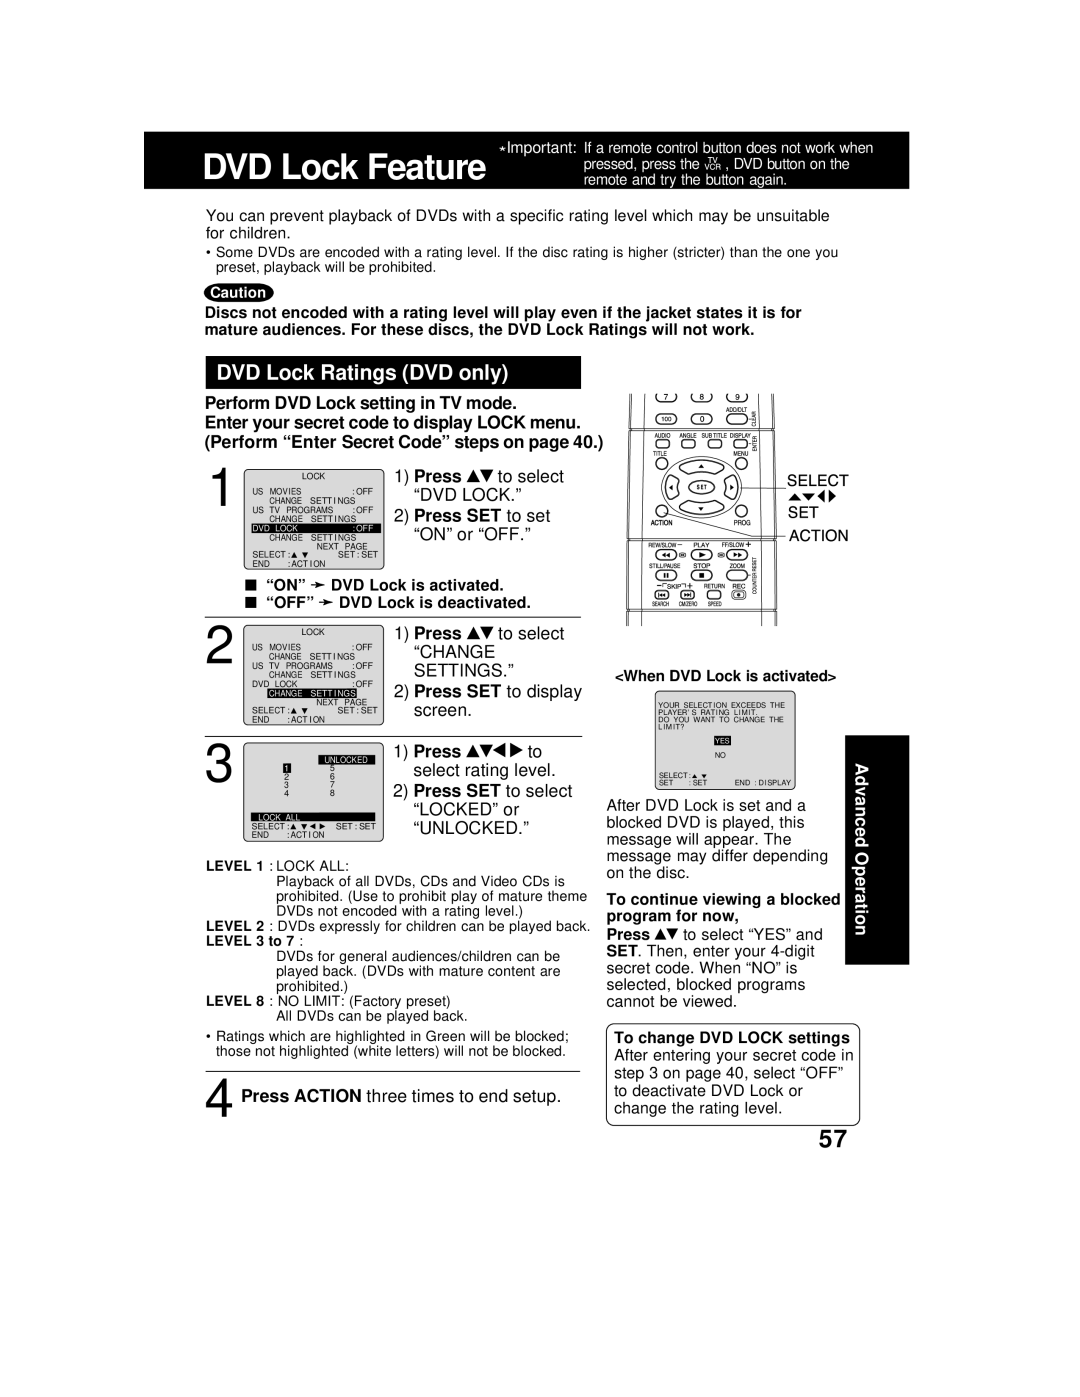 Panasonic AG 527DVDE manual DVD Lock Ratings DVD only, Perform DVD Lock setting in TV mode, Press SET to set 